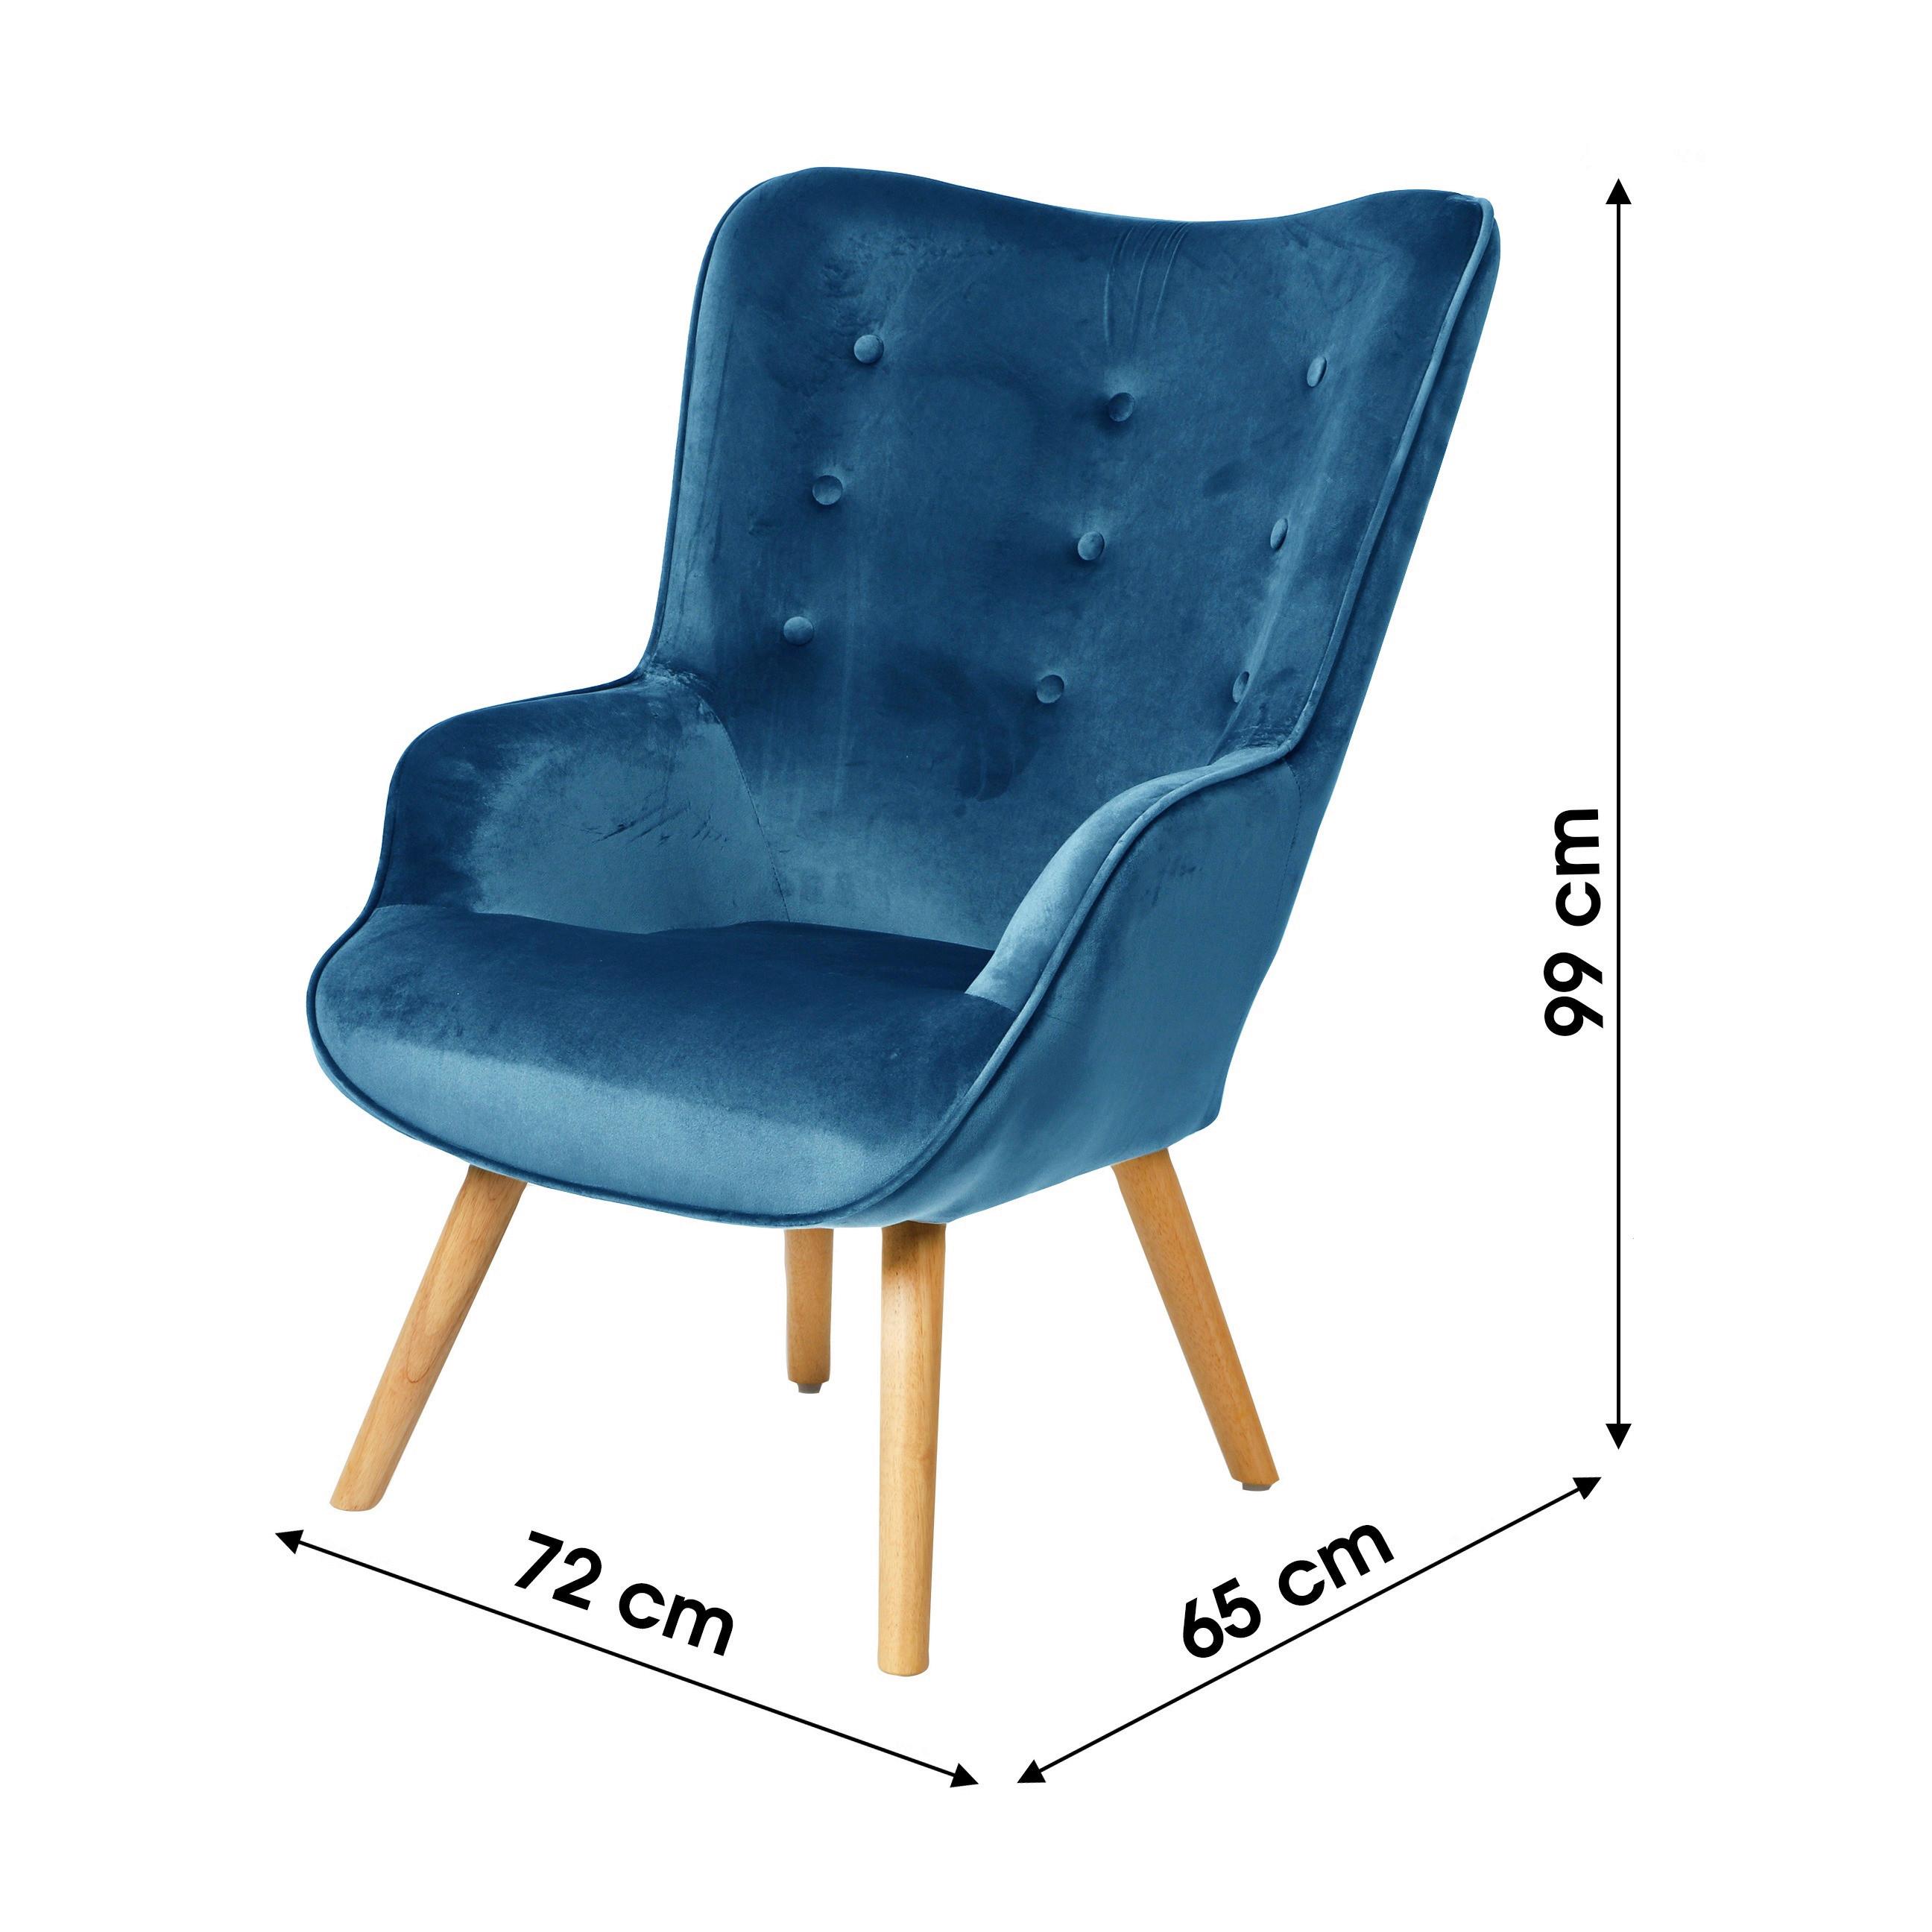 Fotel Malcolm - Natúr/Kék, Fa/Textil (72/99/65cm)